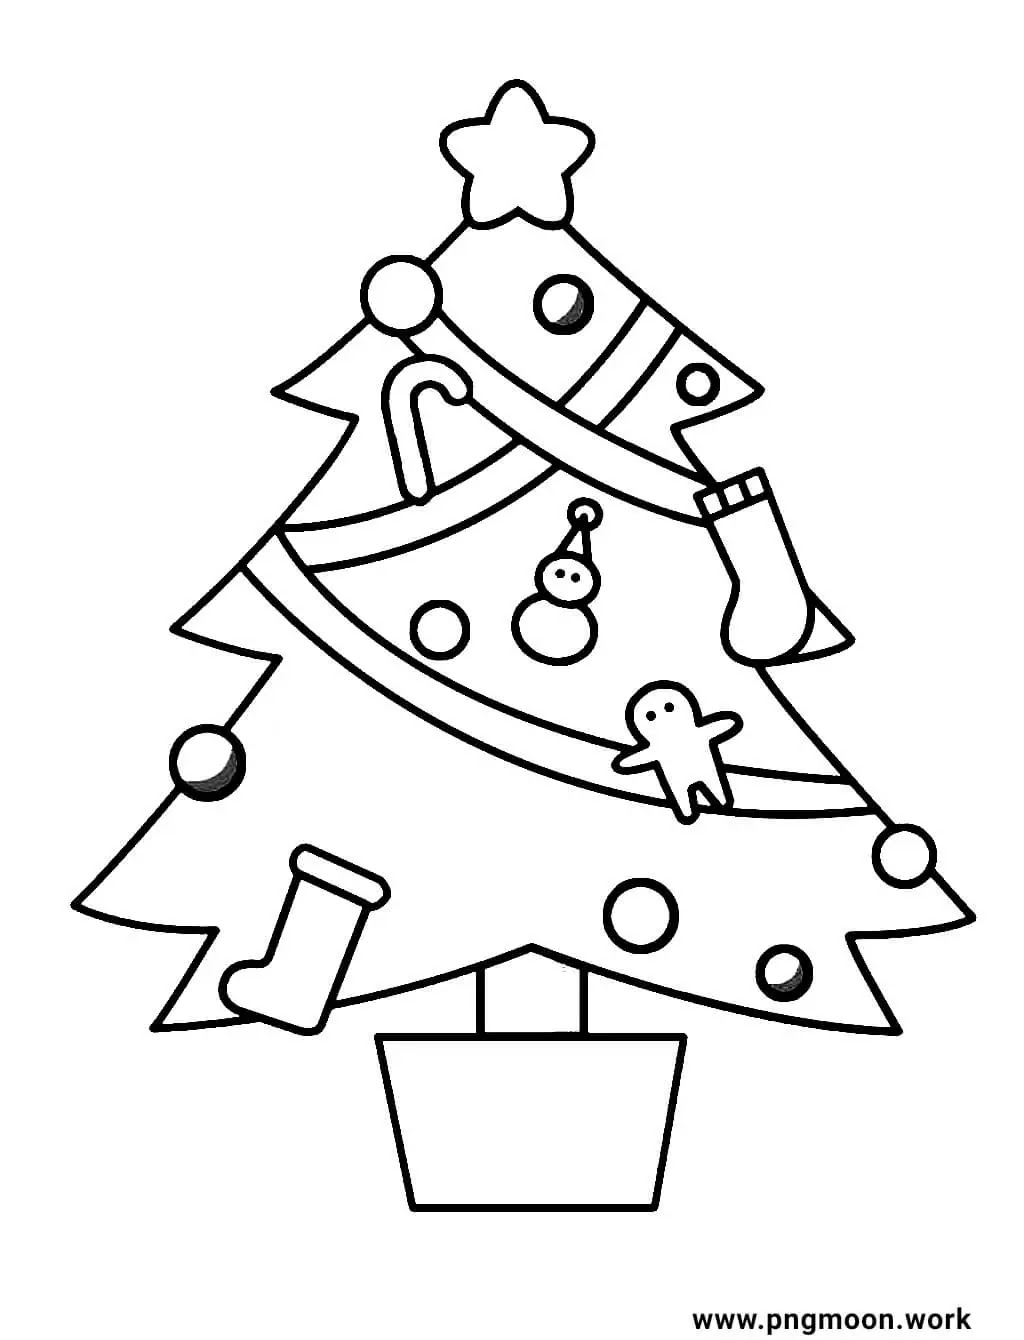 Christmas Tree outline